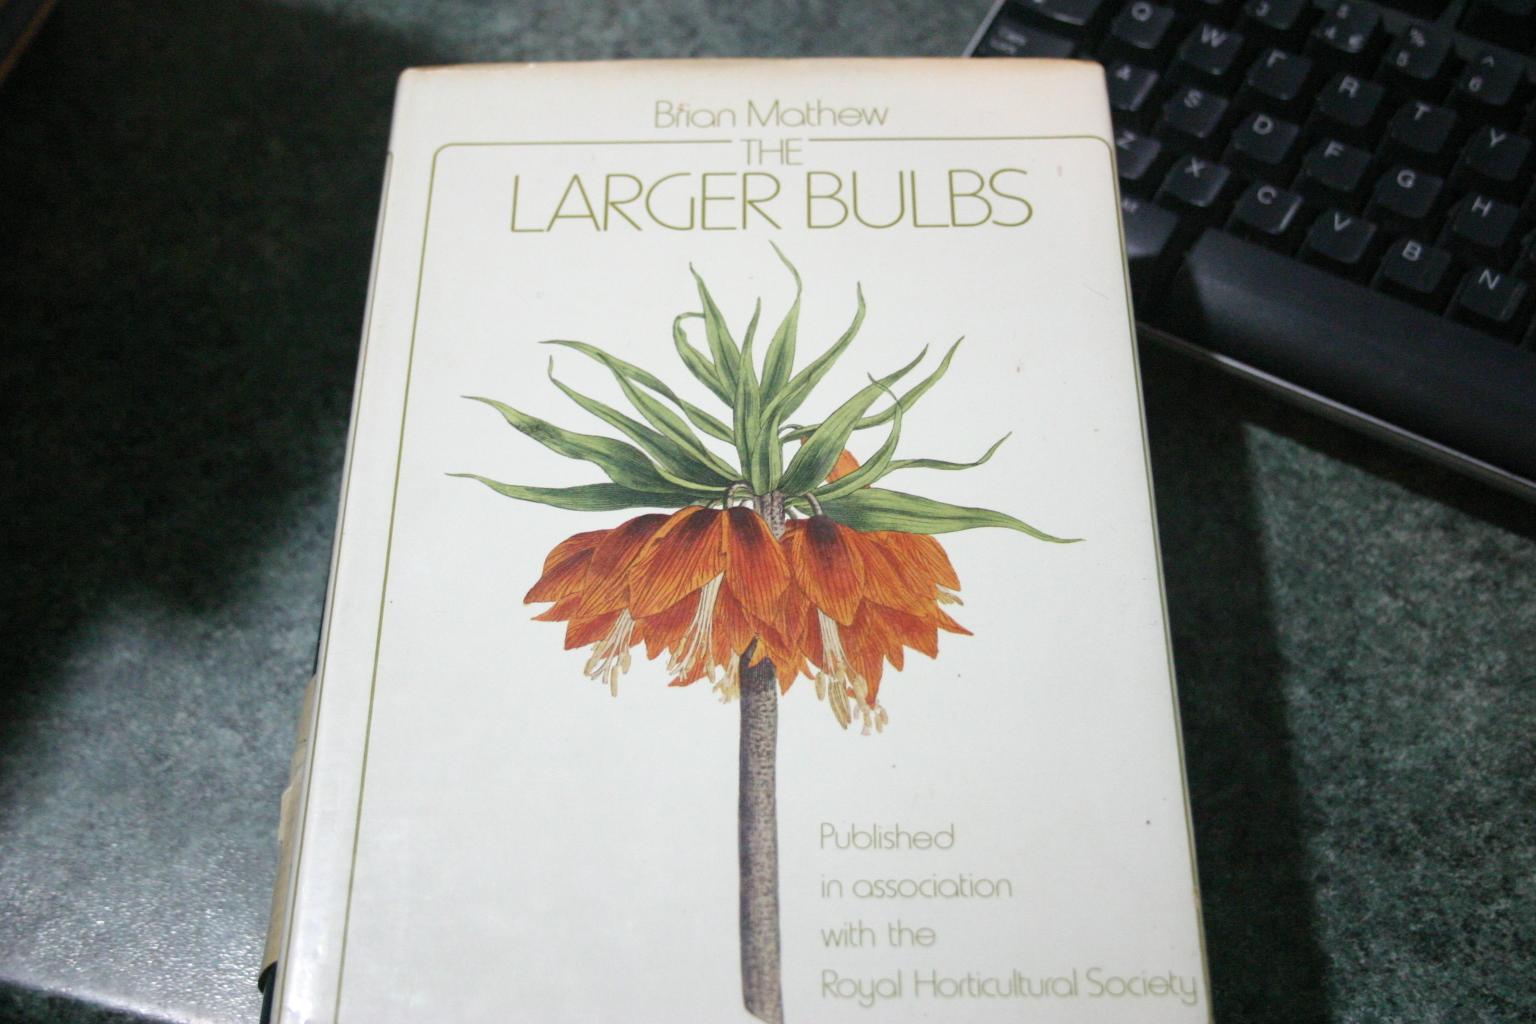 The Larger Bulbs - Brian Mathew